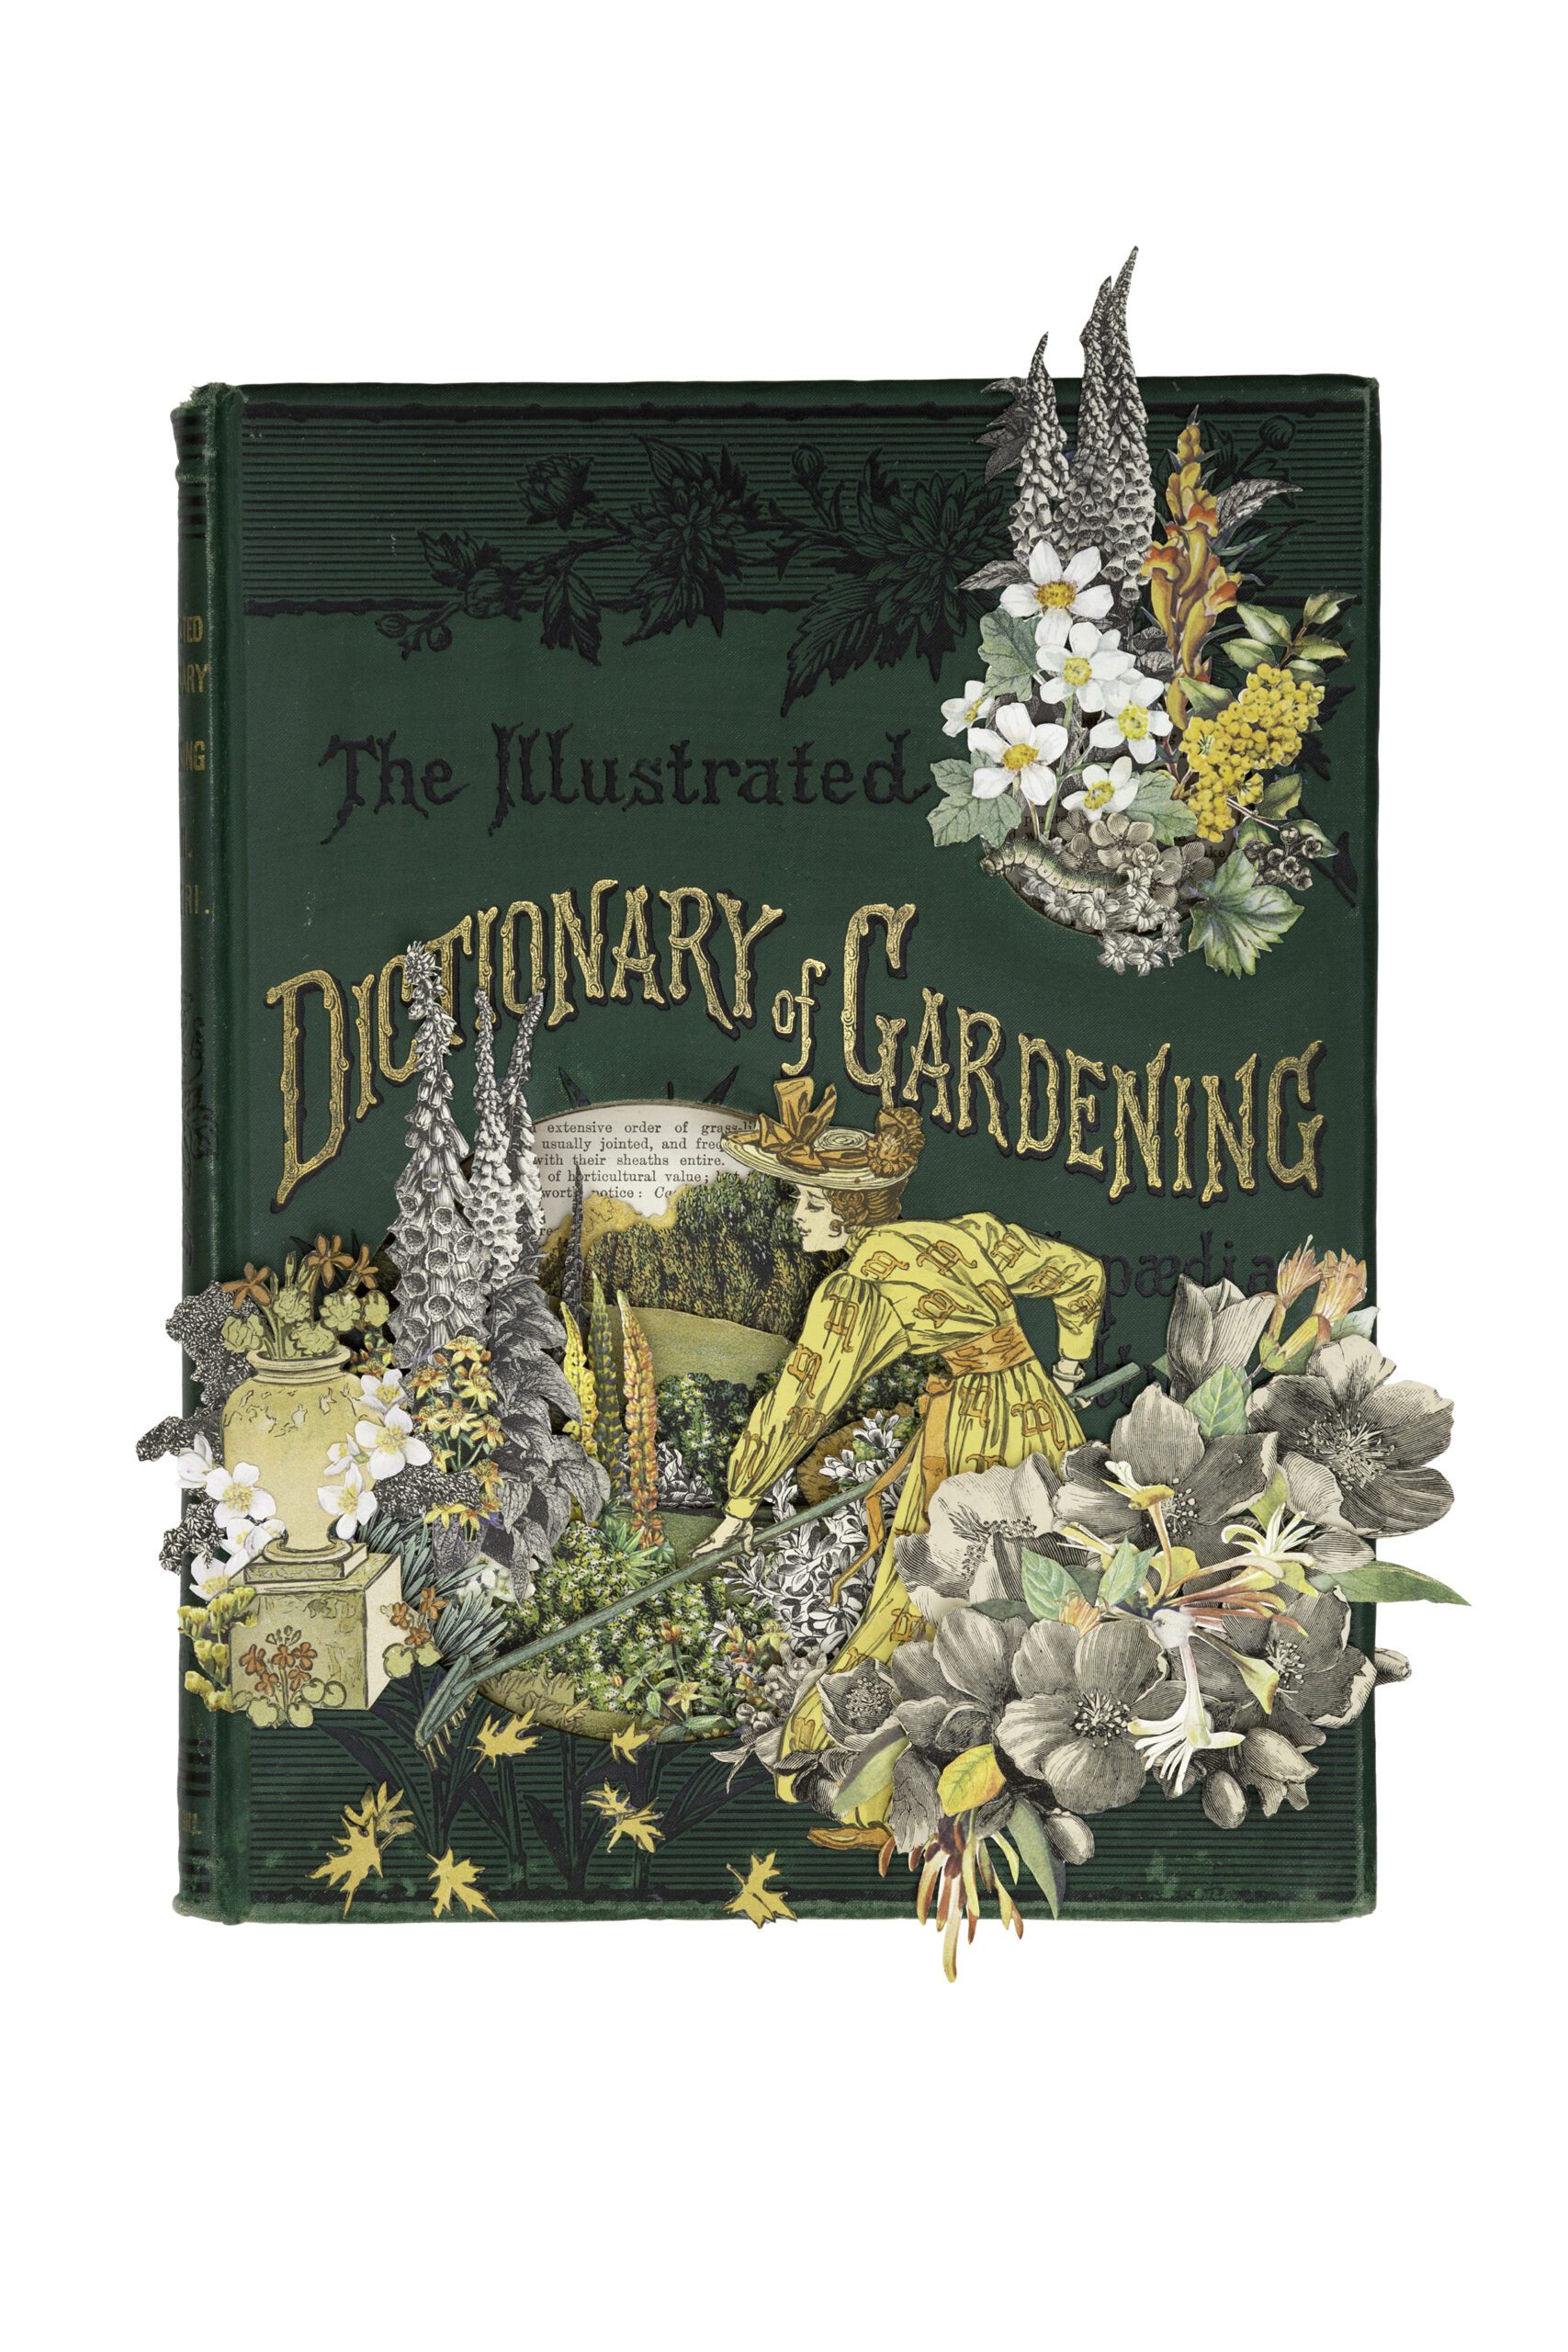 The Encyclopaedia of Gardening